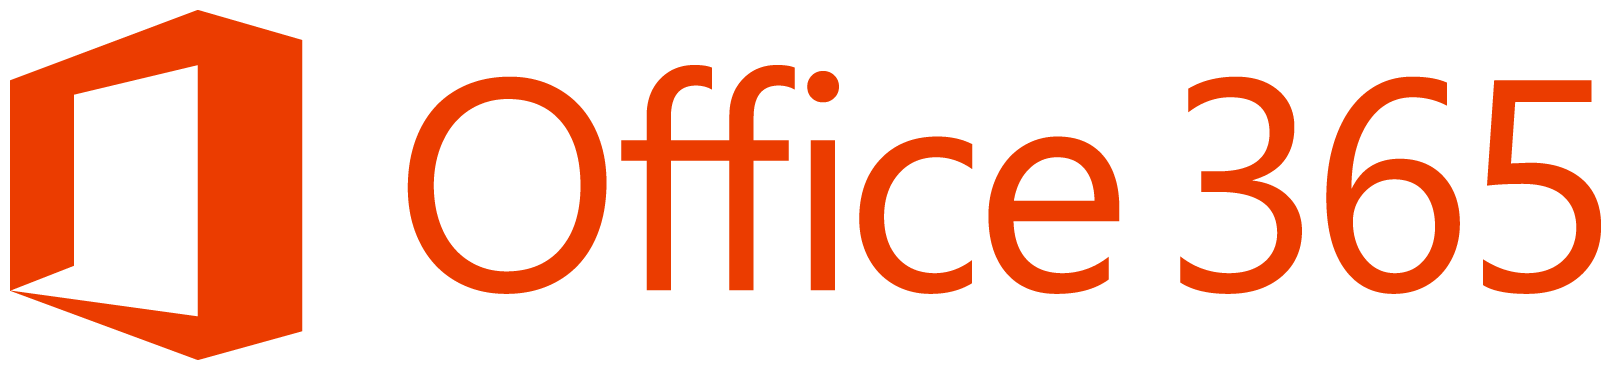 Presentation Template: Microsoft Office 365